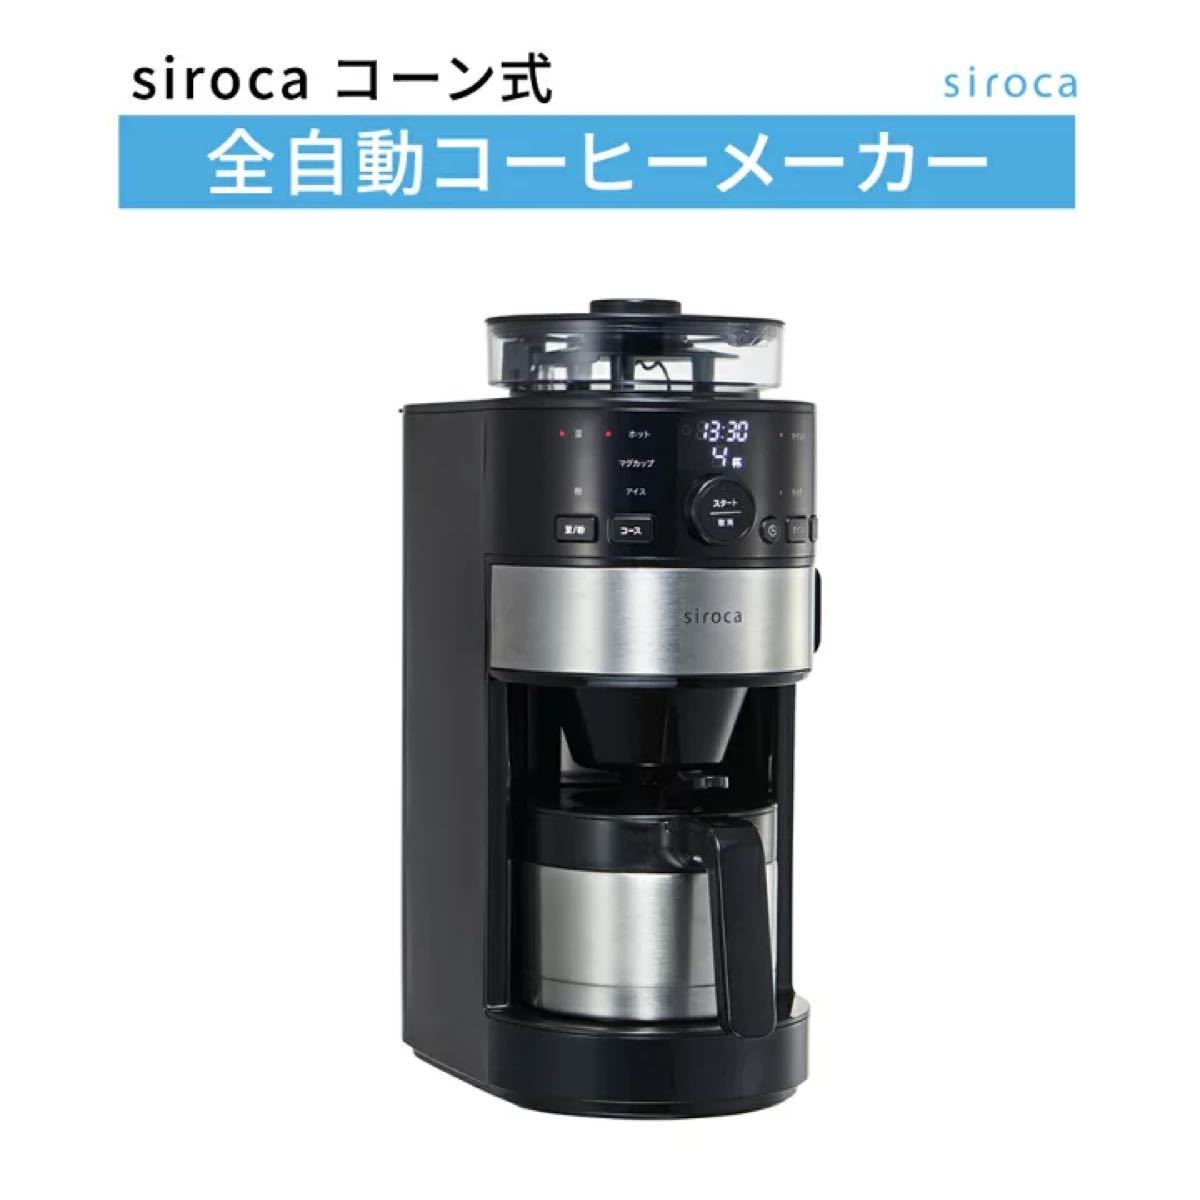 siroca コーン式全自動コーヒーメーカー SC-C122 新品未使用